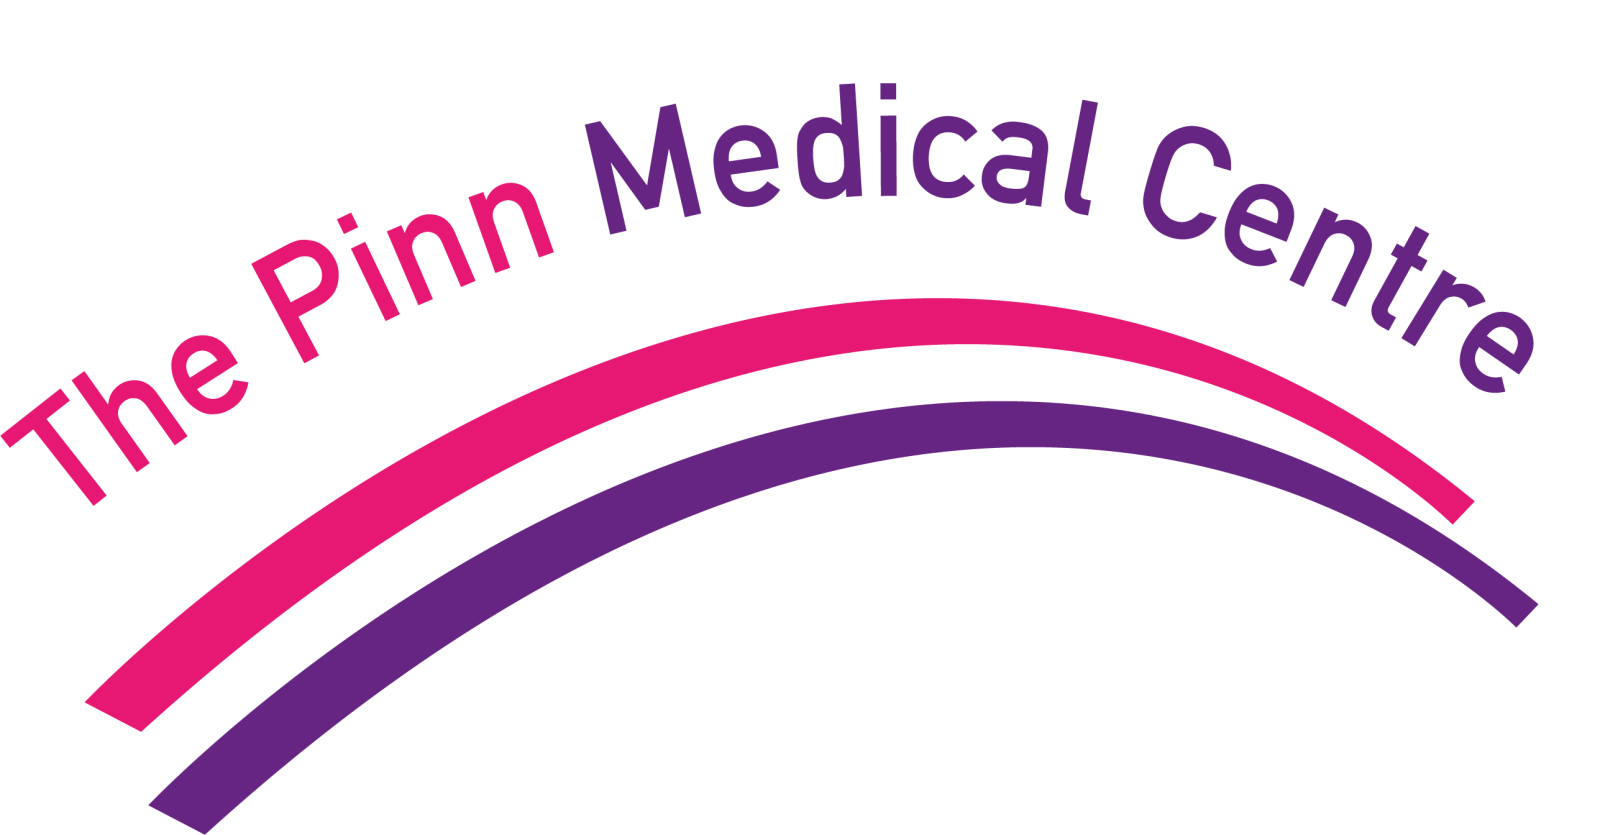 The Pinn Medical Centre logo